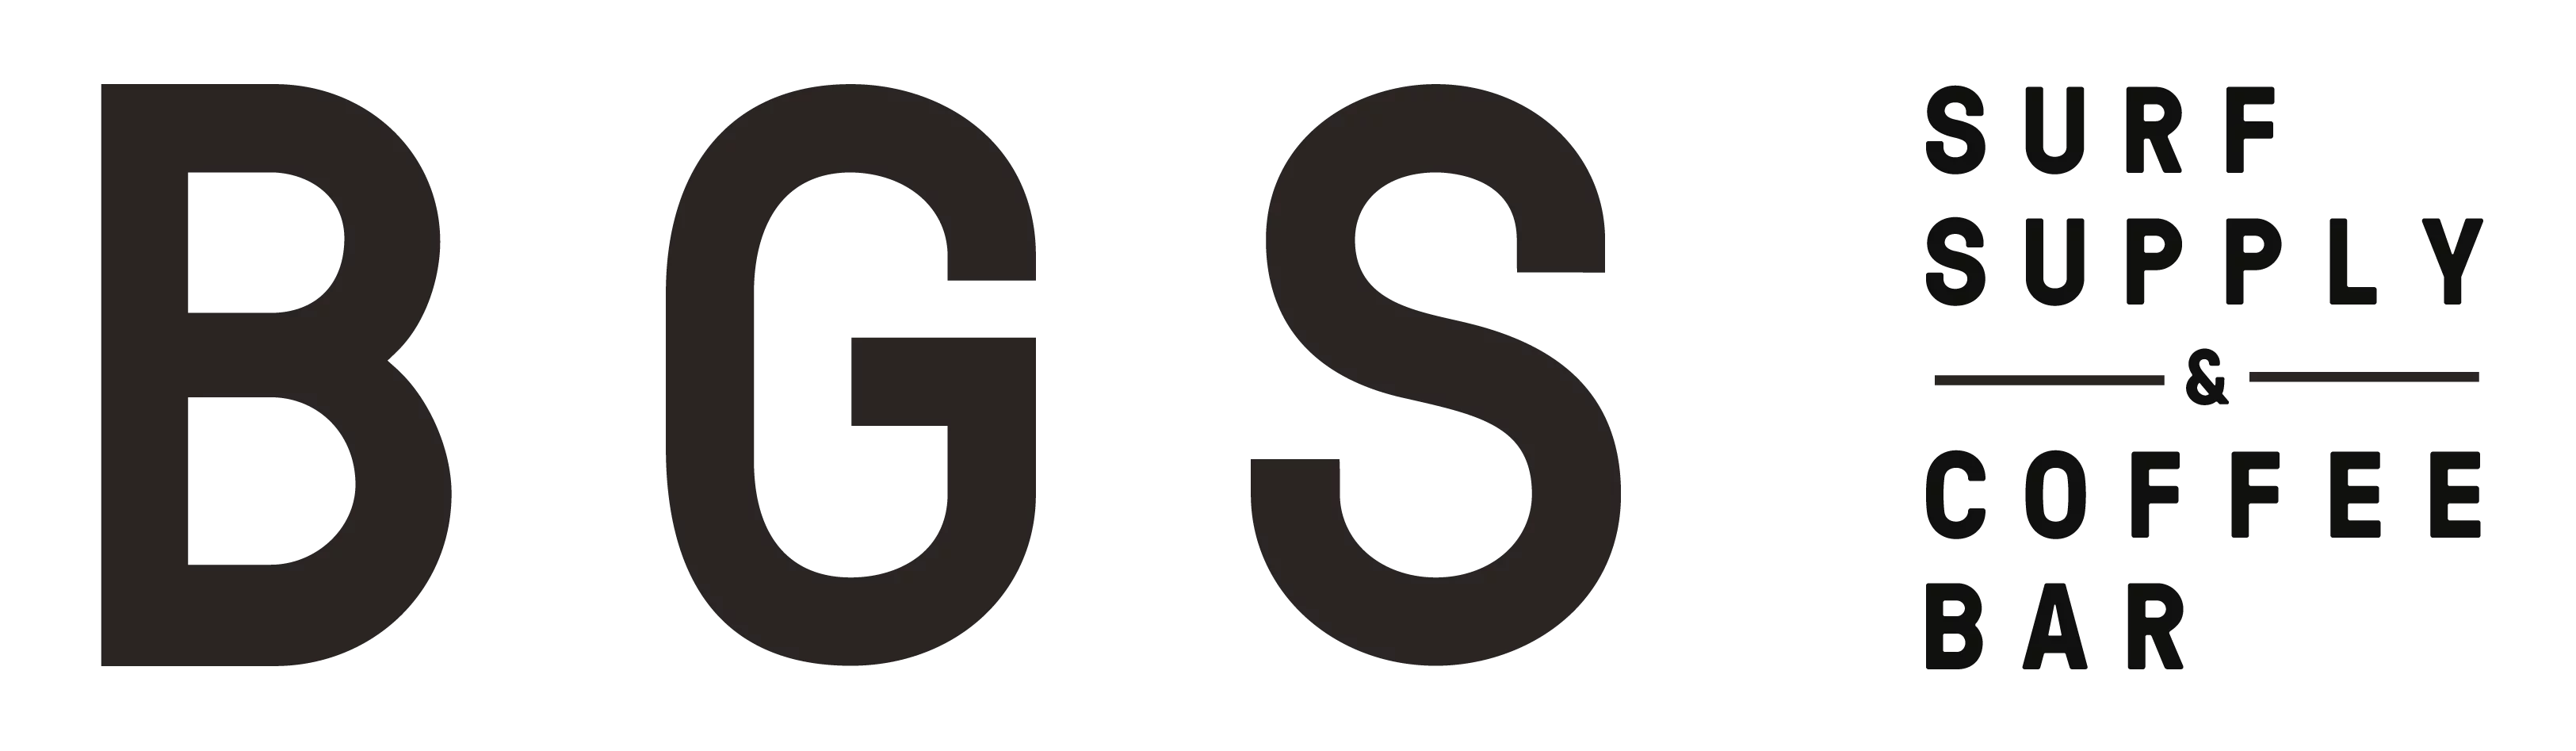 logo bgs bali surf supply and coffee bar